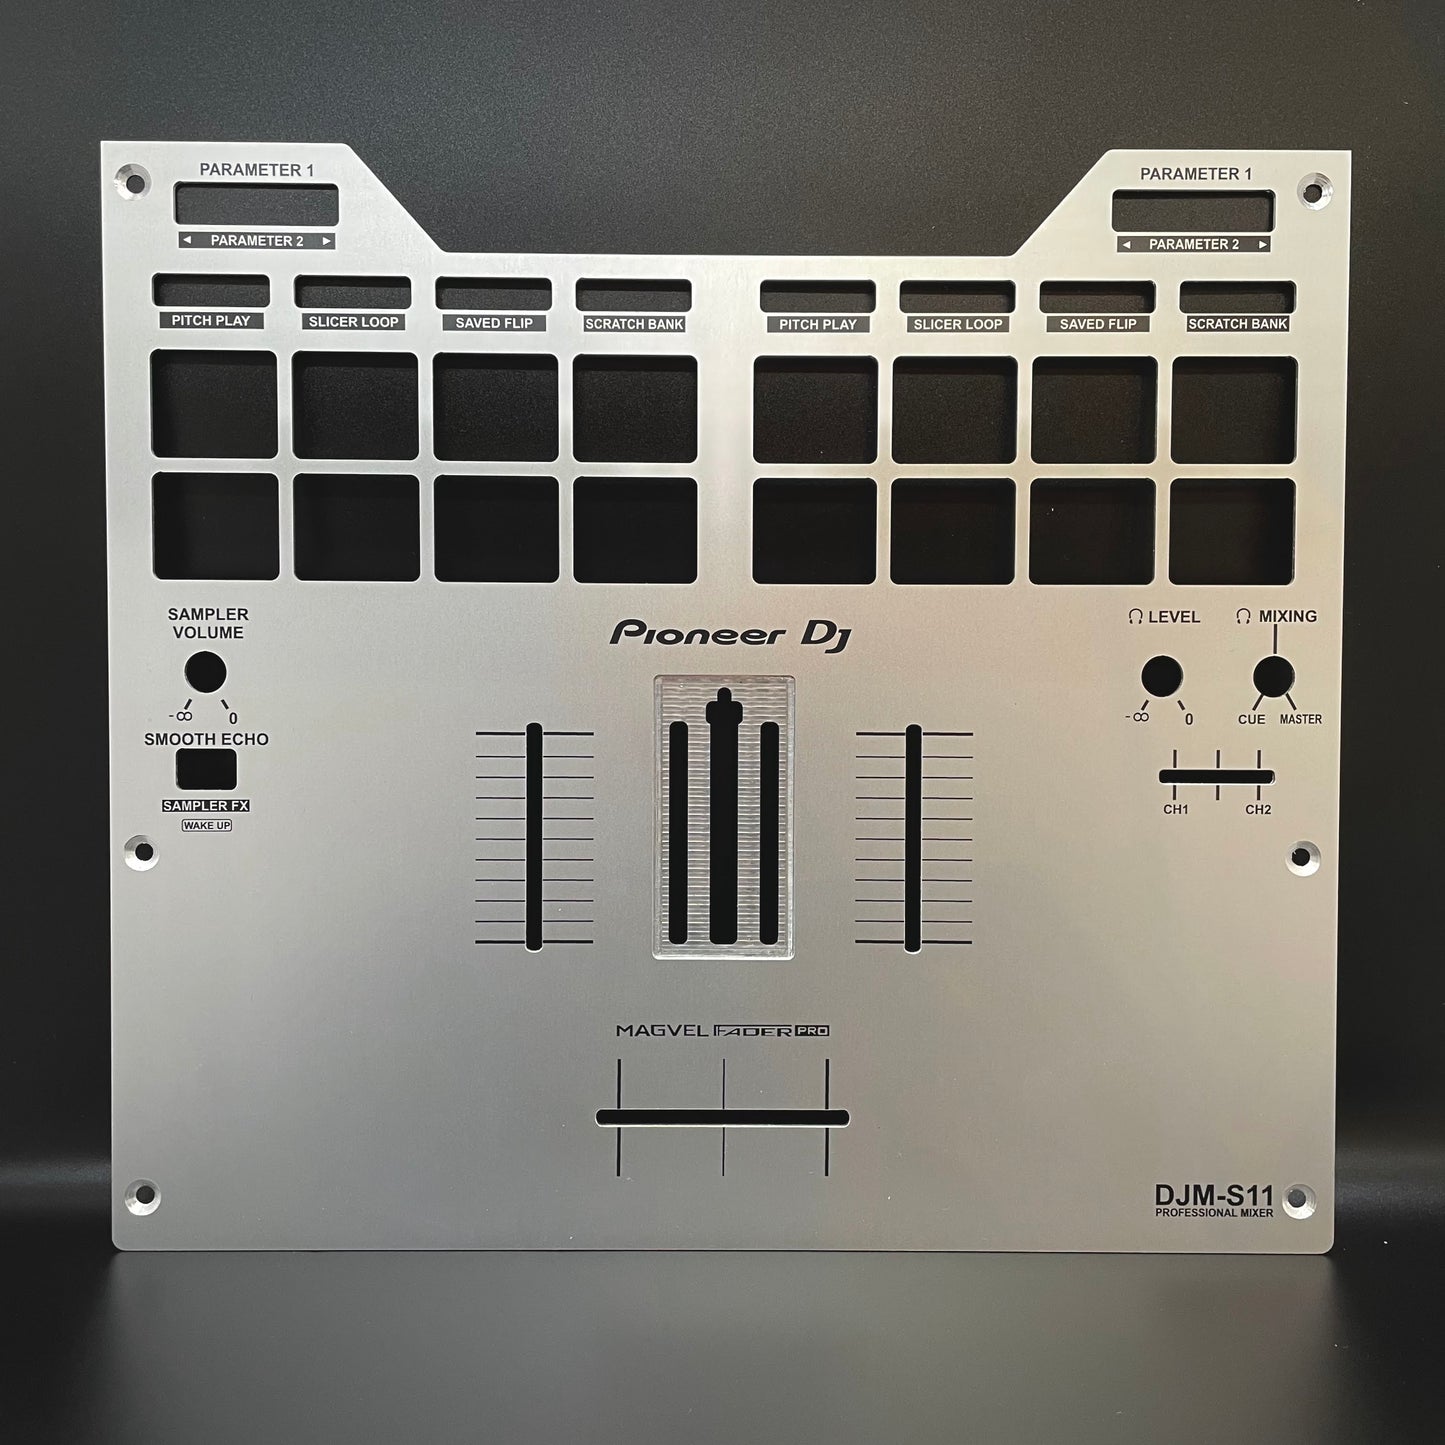 Faceplate - NMCP Studio - Pioneer DJM-S11